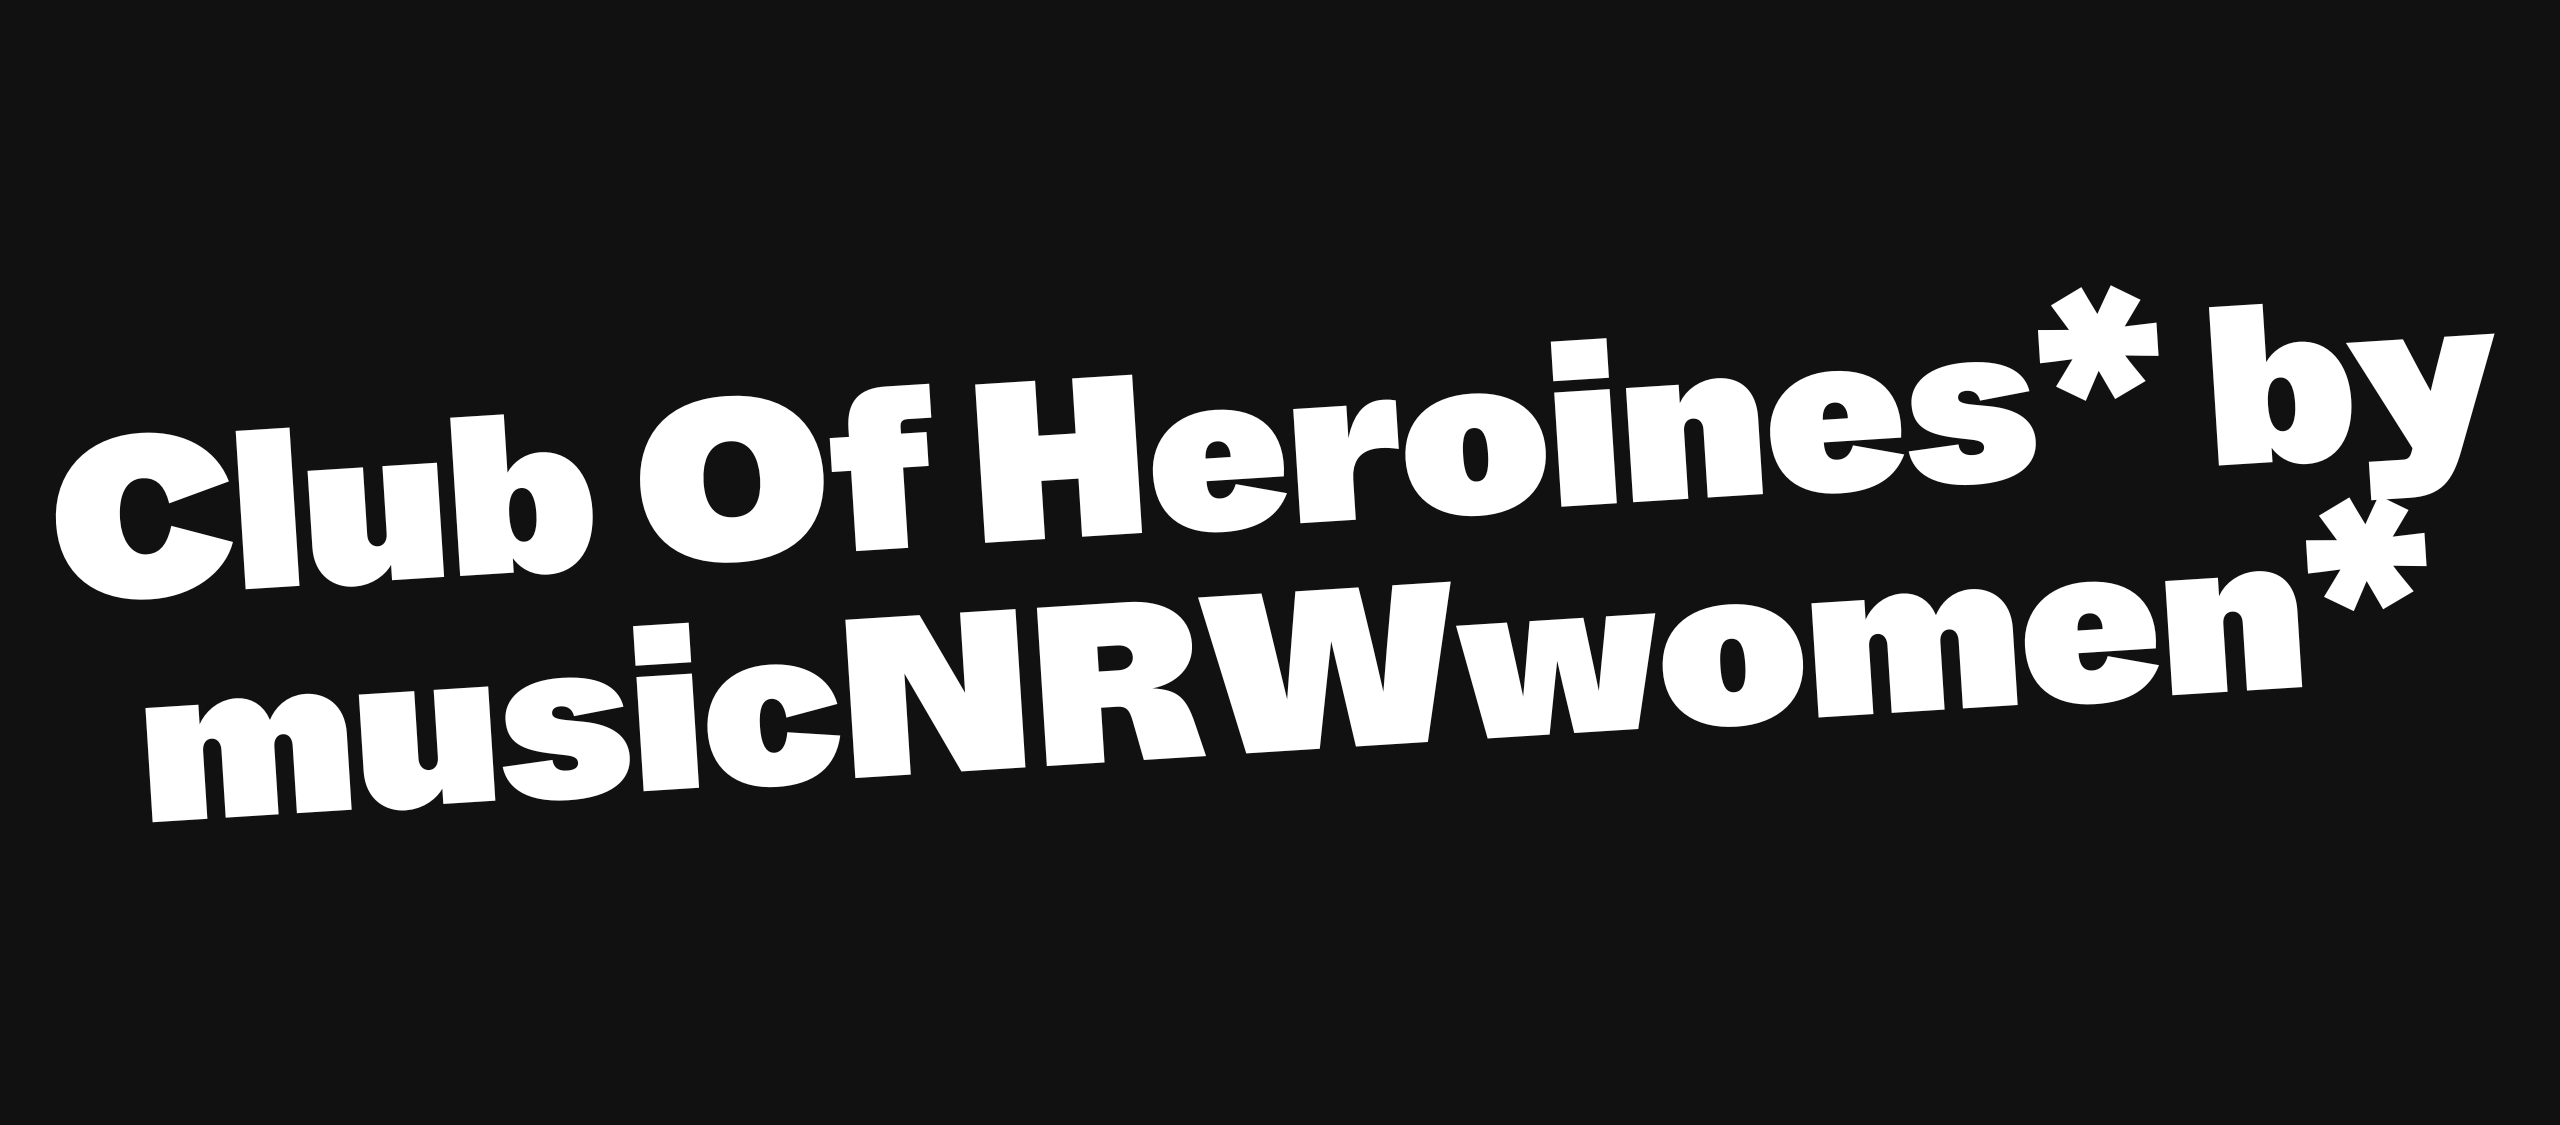 Club of Heroines* by musicNRWwomen*